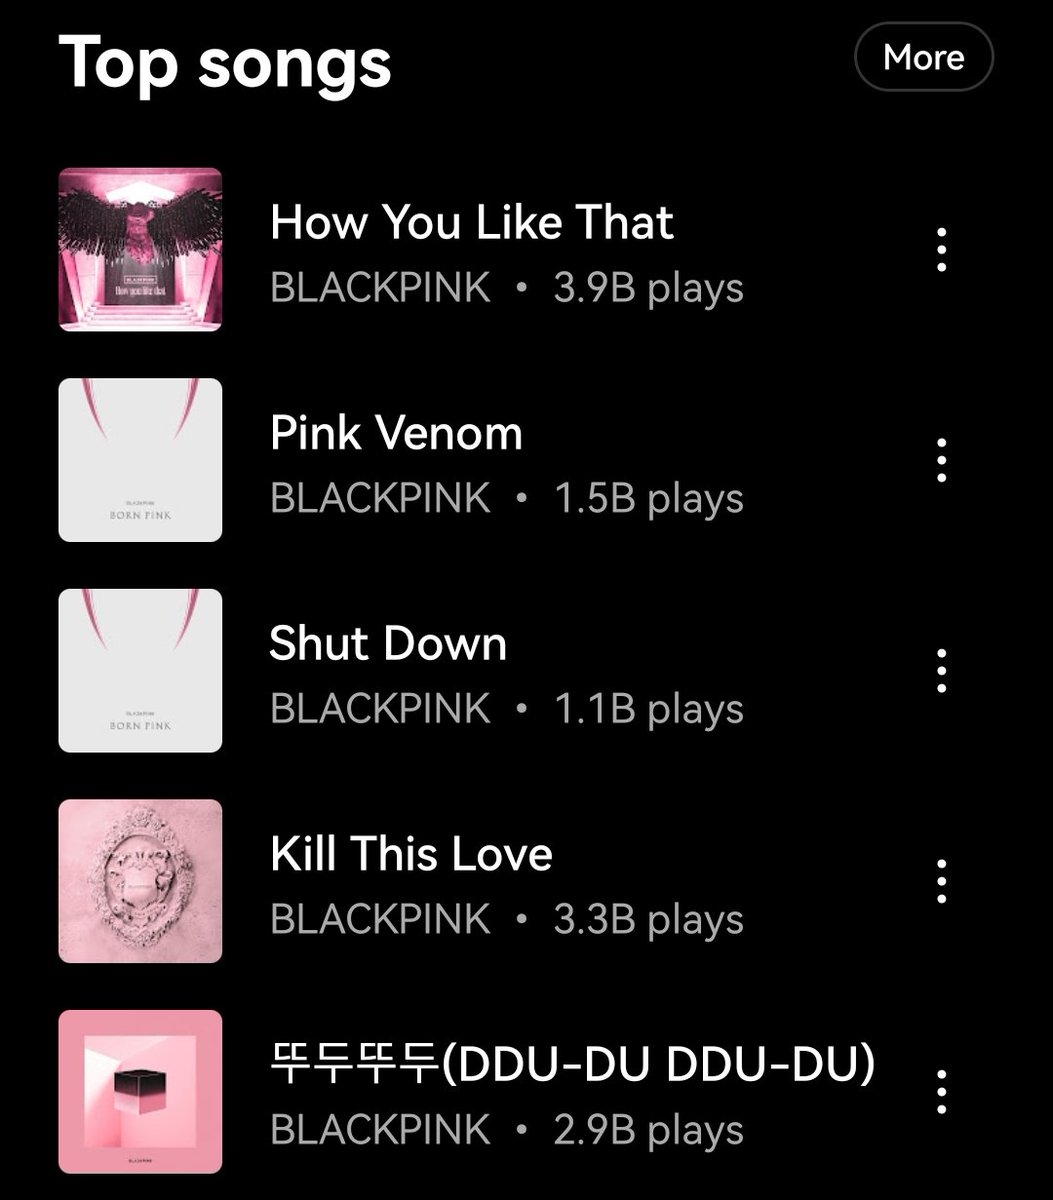 “DDU-DU DDU-DU” has re-entered #BLACKPINK's Top 5 most popular songs on YouTube Music at #5, replacing 'Lovesick Girls'.